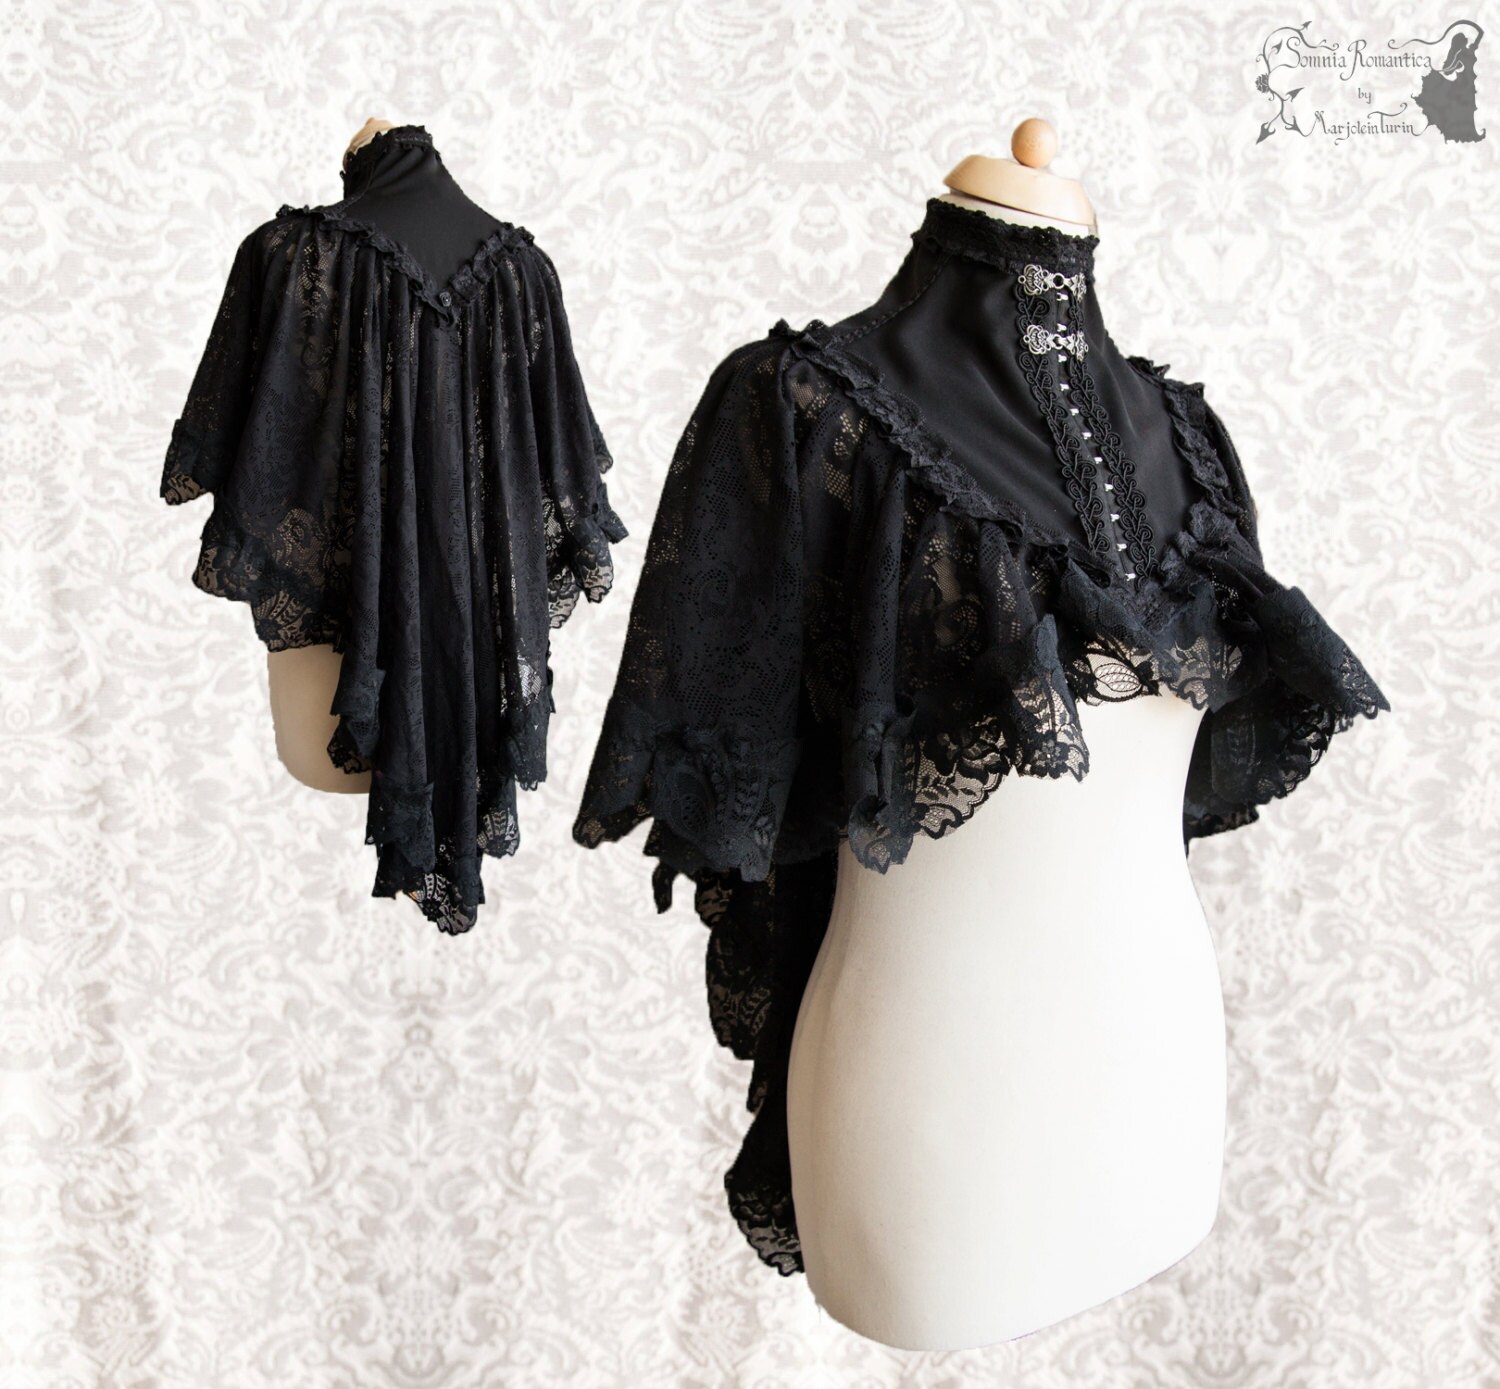 Capelet Victorian Goth black lace shrug Steampunk